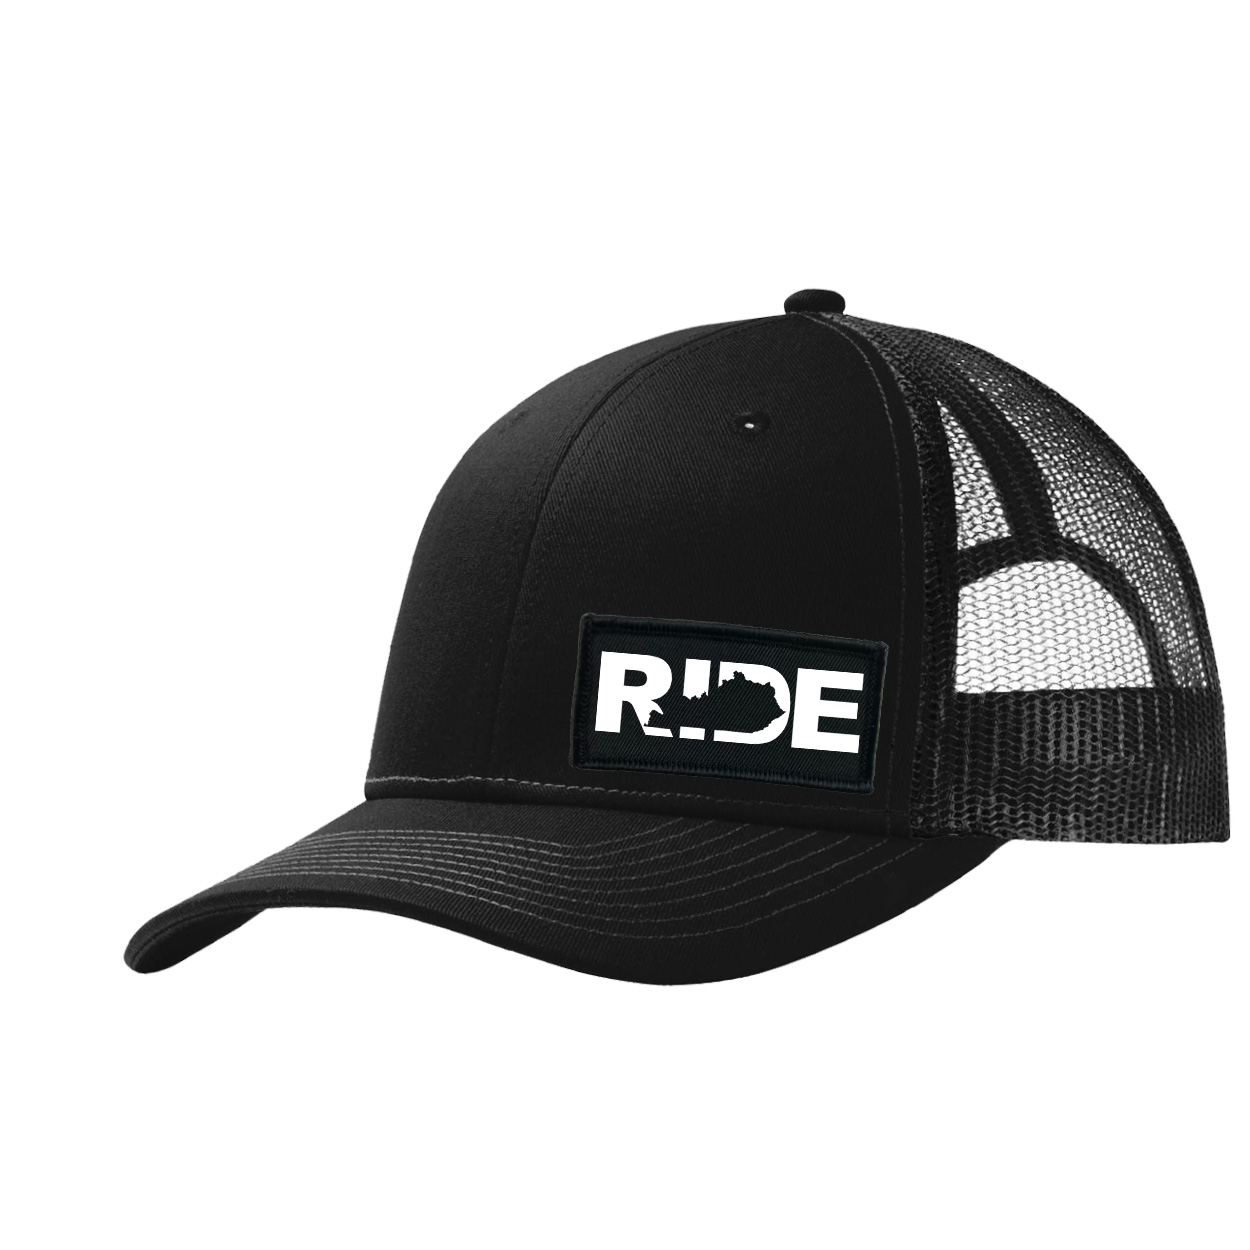 Ride Kentucky Night Out Woven Patch Snapback Trucker Hat Black (White Logo)